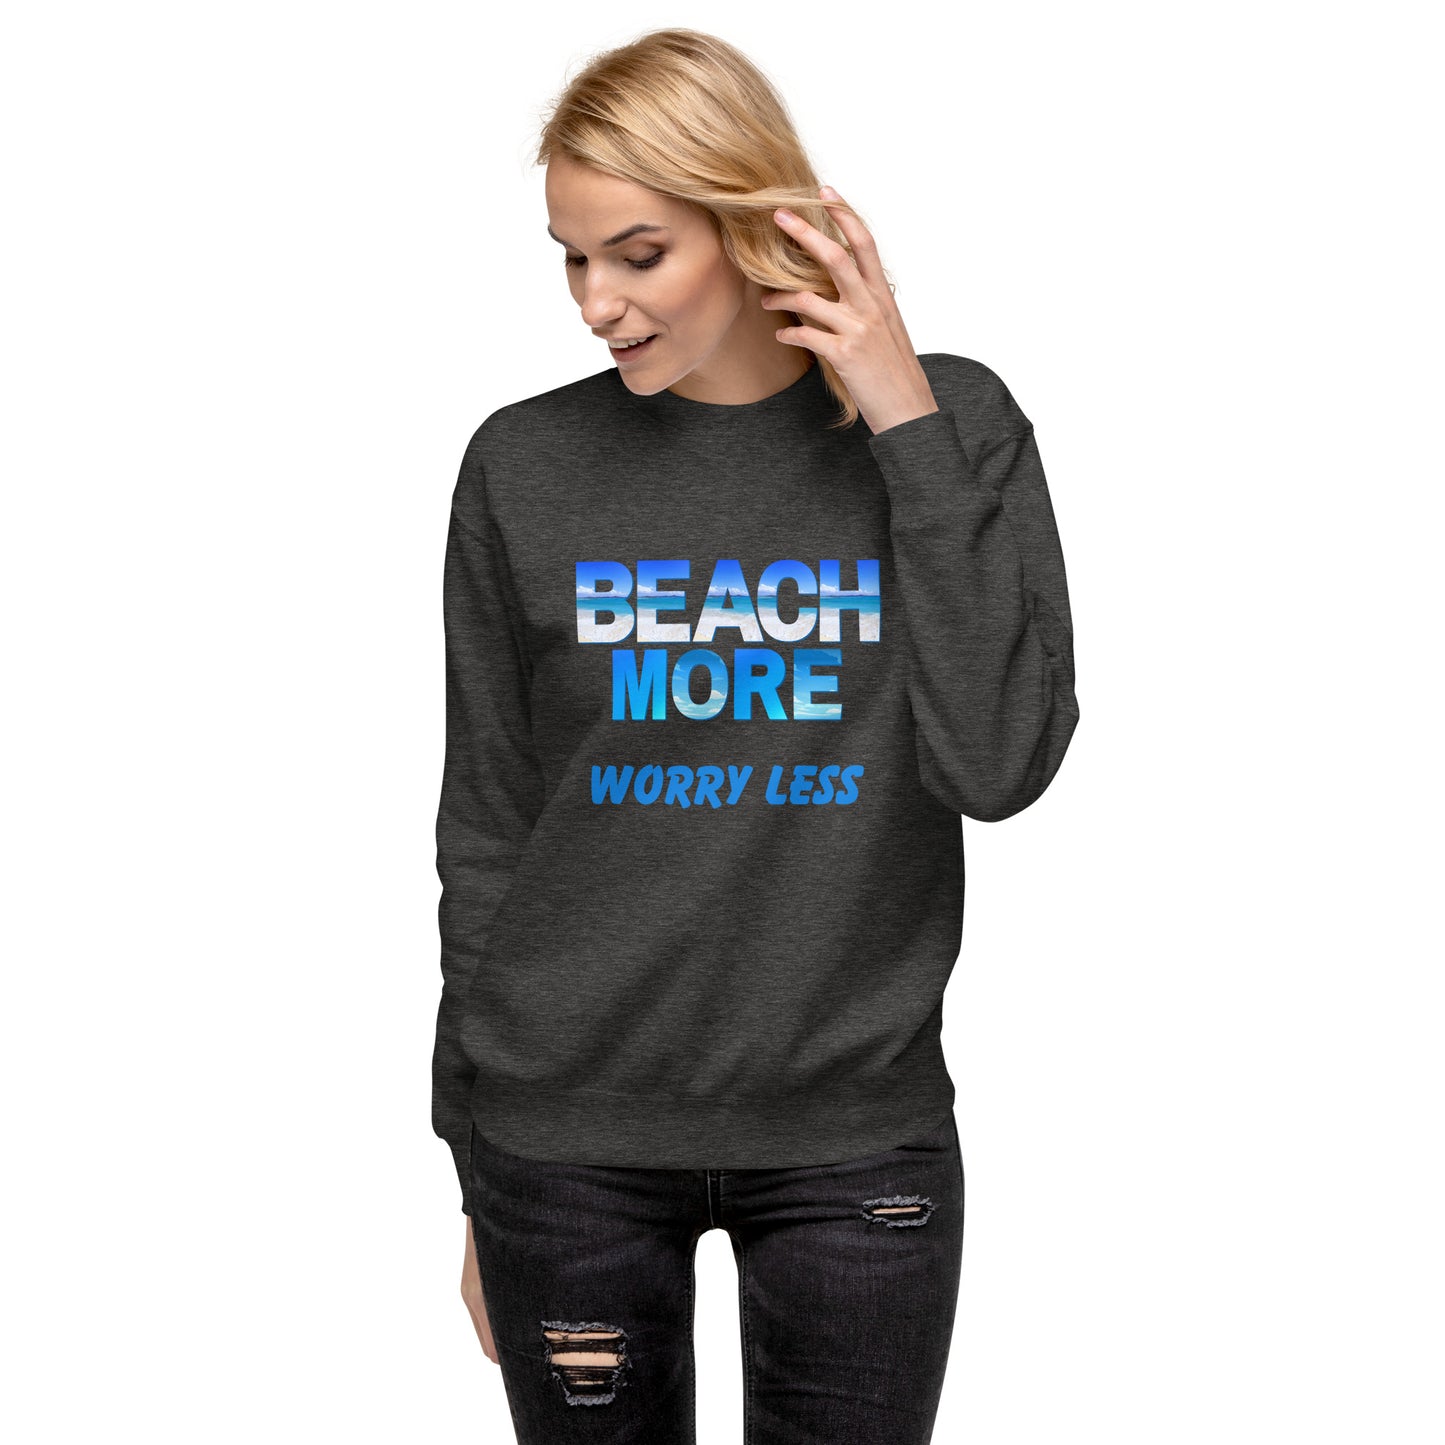 Unisex Premium Sweatshirt - Beach More Worry Less